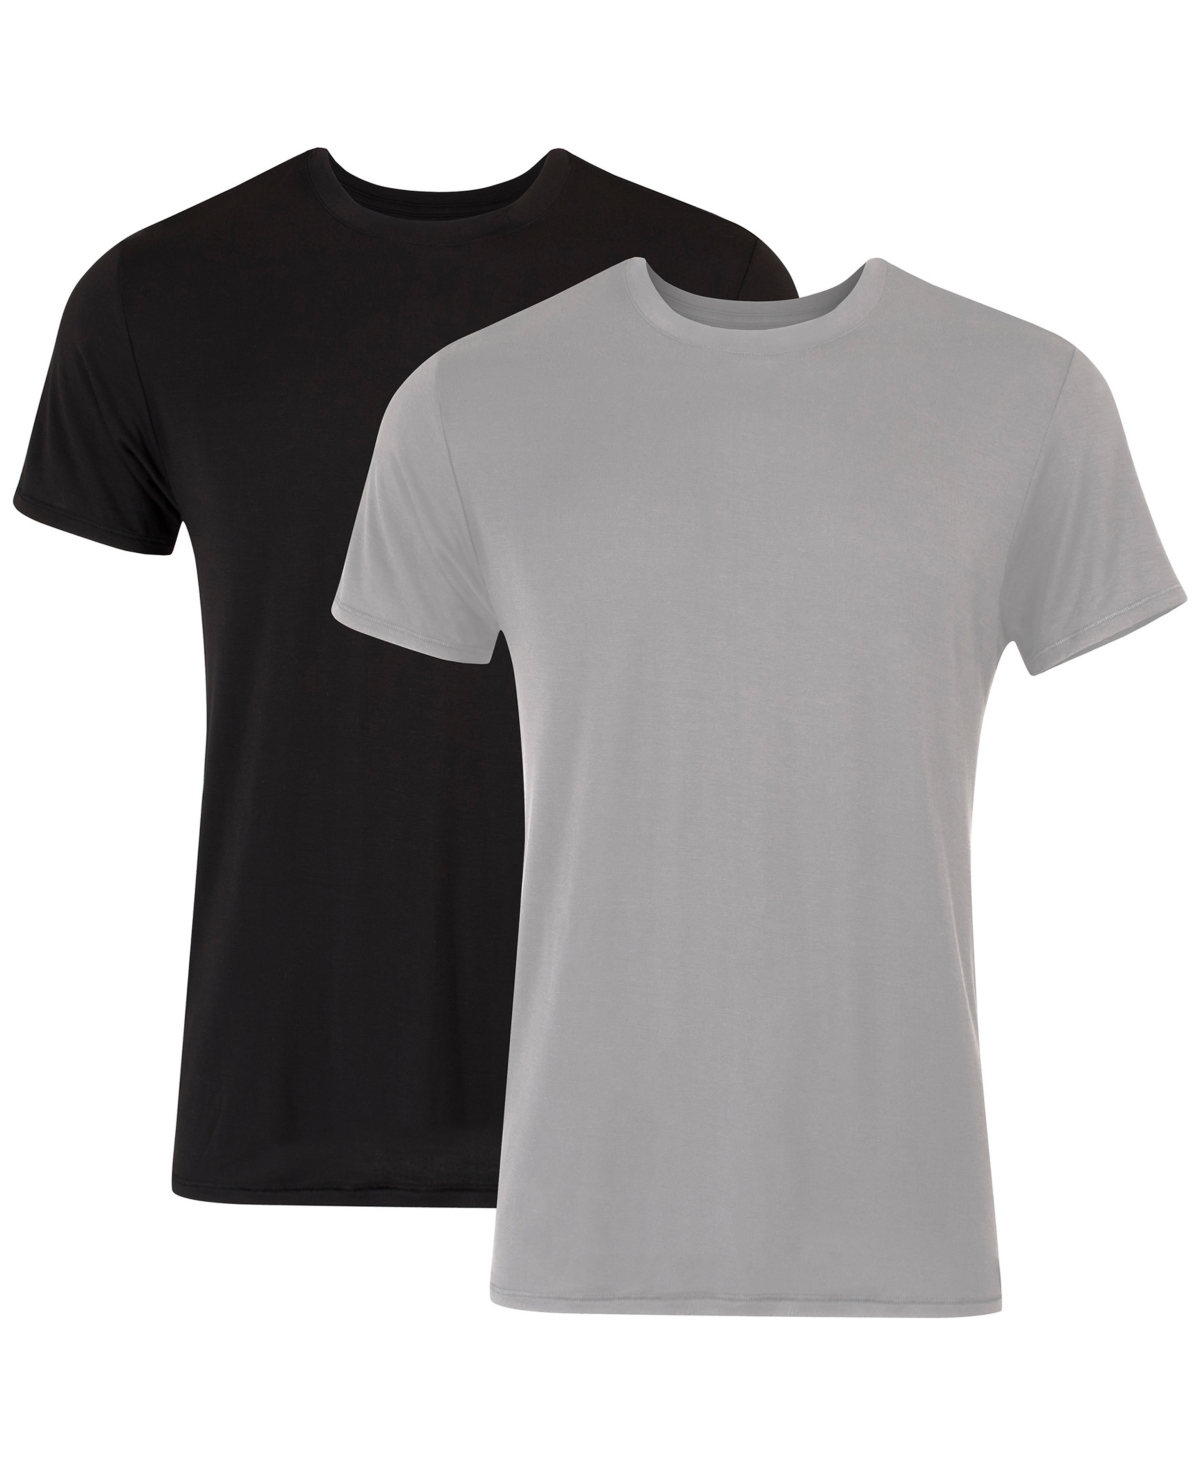 Originals Ultimate Men's SuperSoft Crewneck T-Shirt, Black/Gray, 2-Pack - Assorted